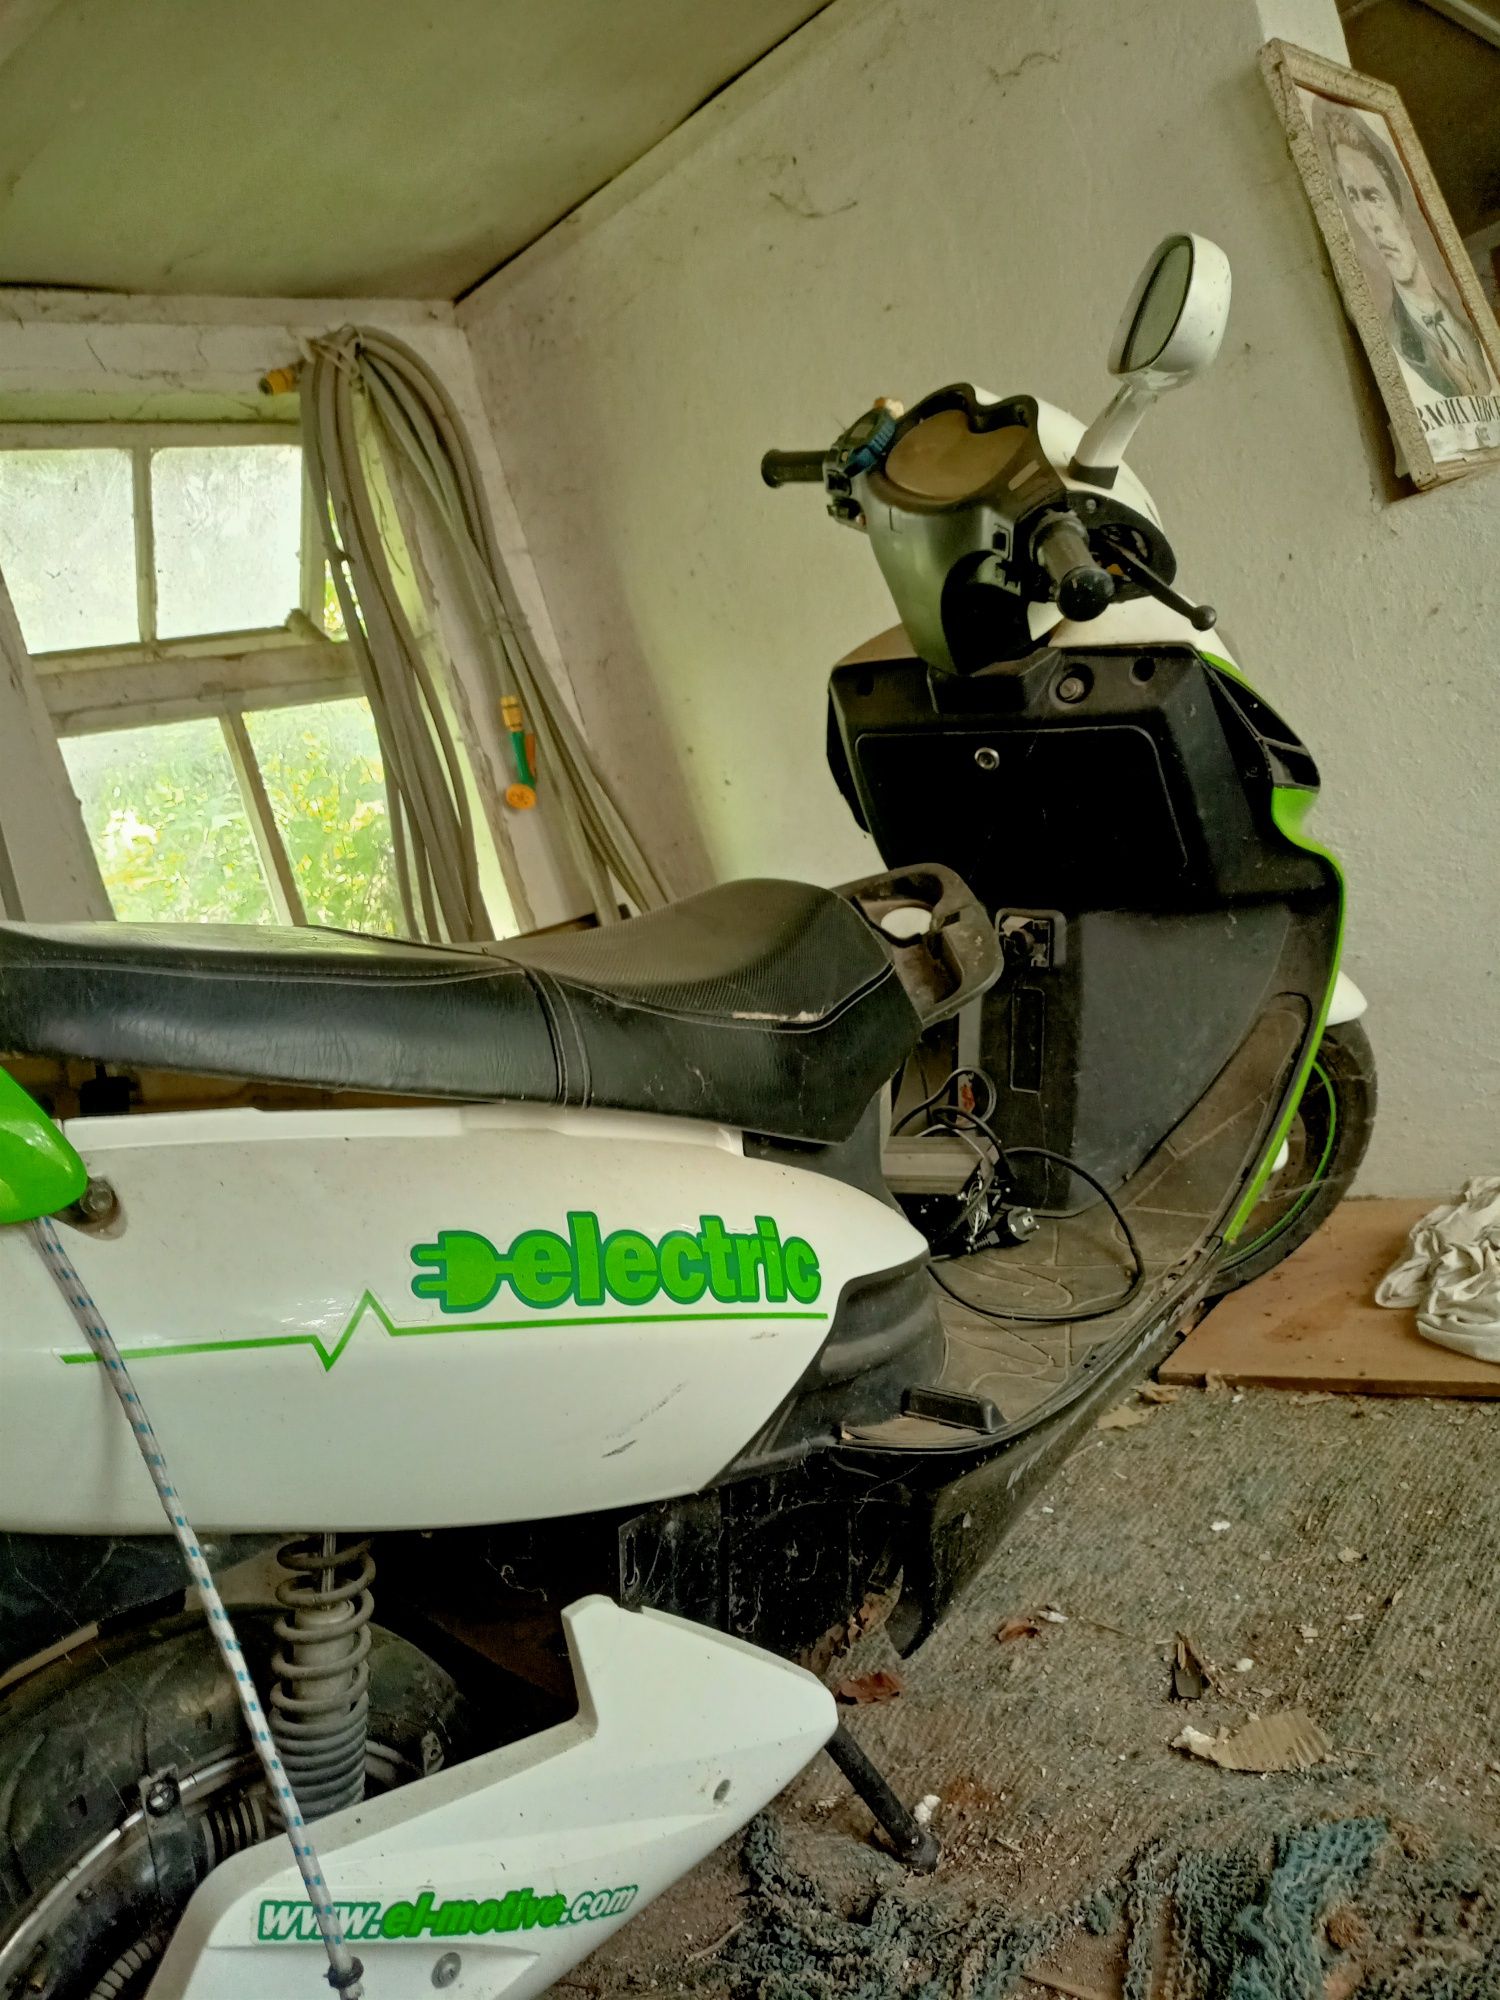 Електро скутер, регистриран, модел джонуей мли, закупен 2015 г.